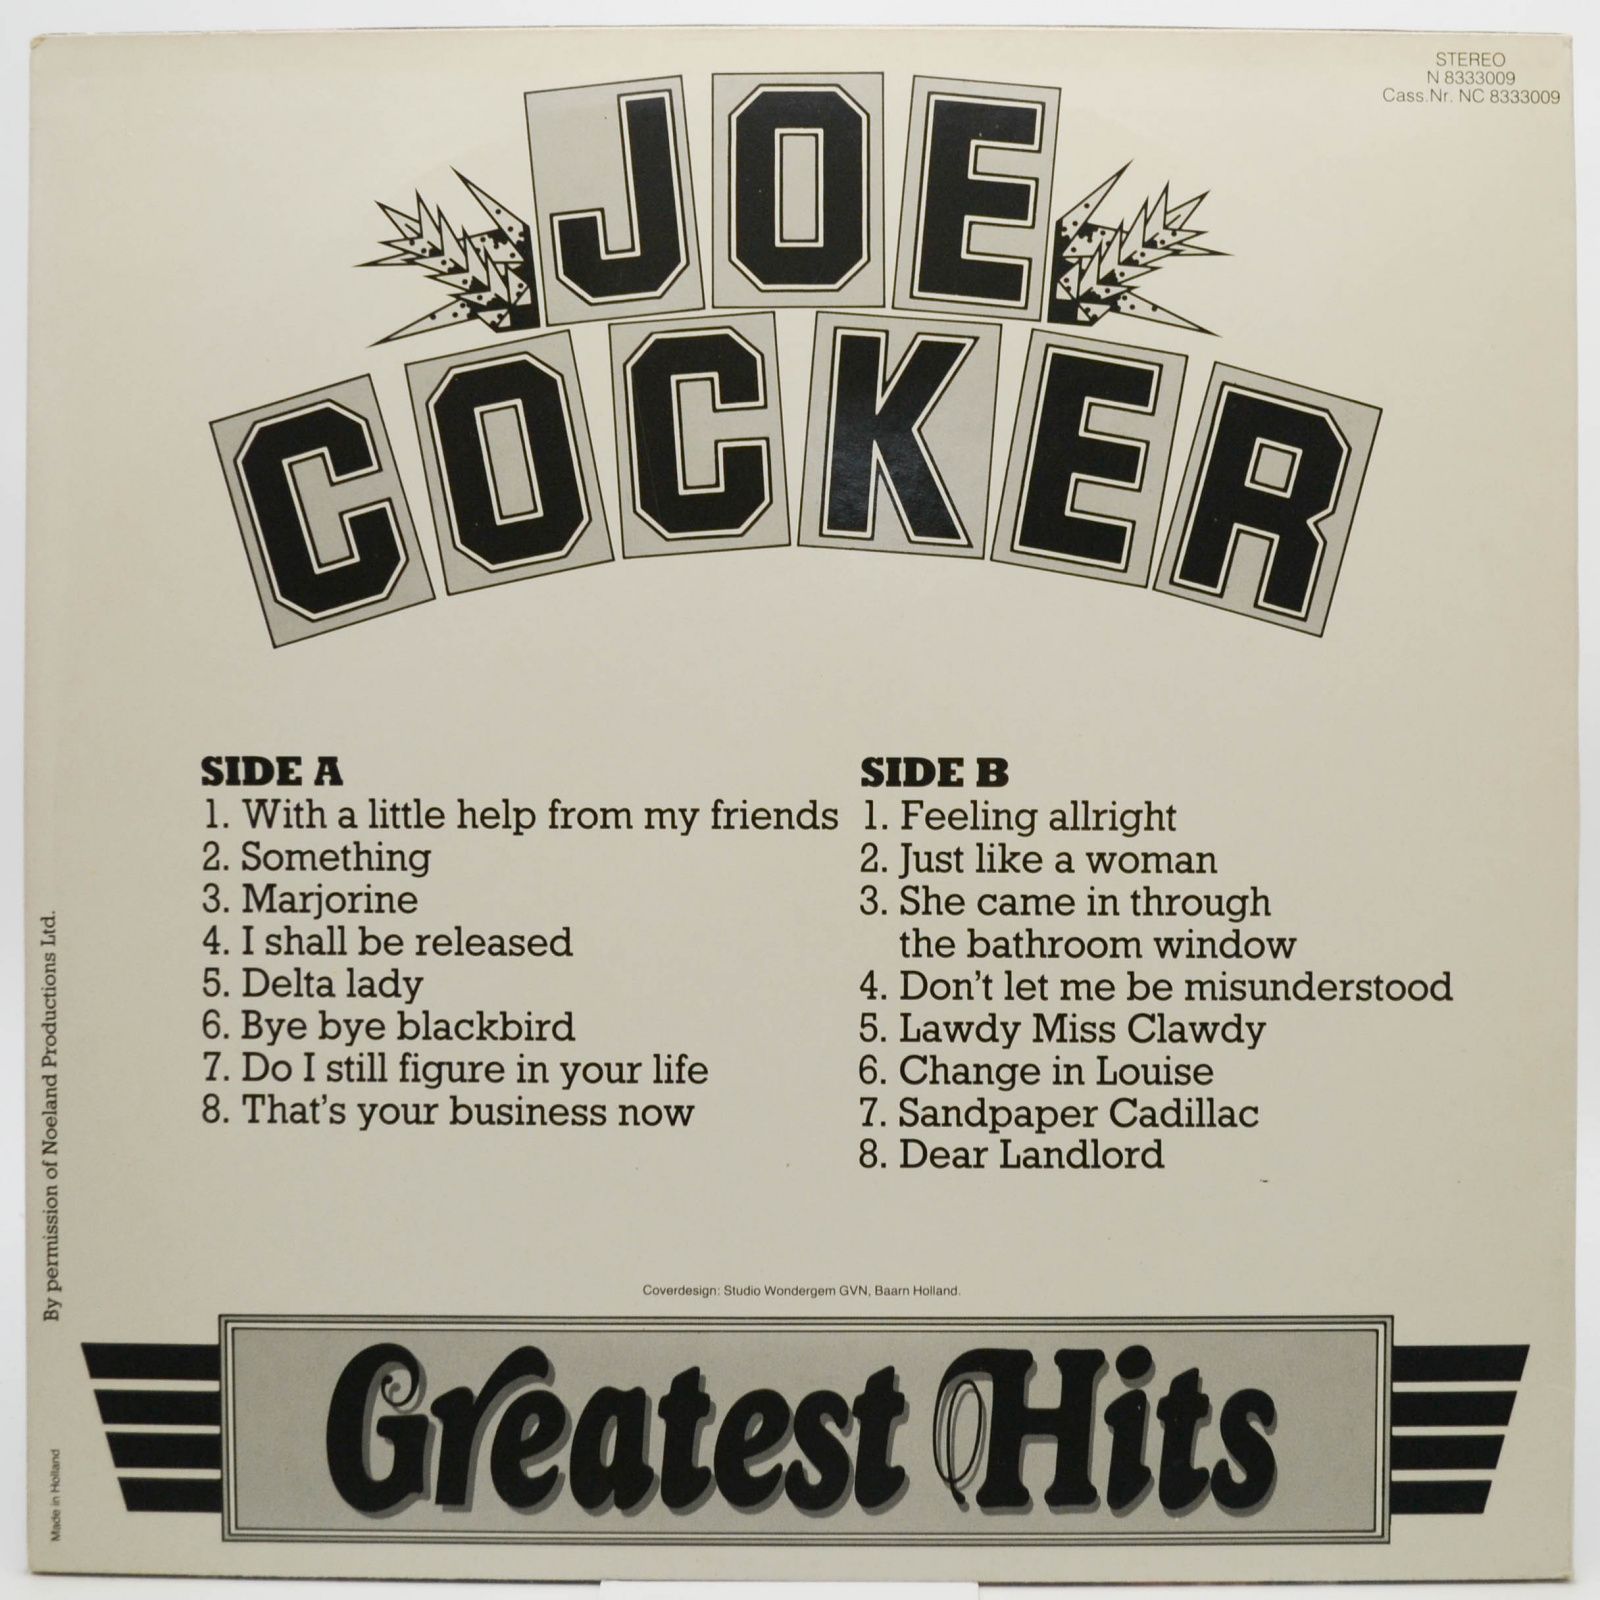 Joe Cocker — 16 Greatest Hits, 1988